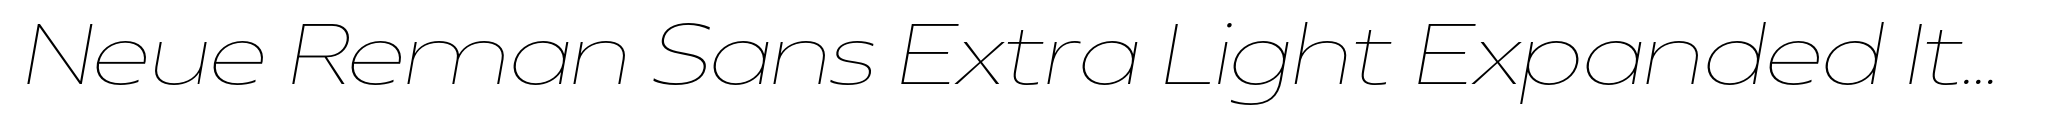 Neue Reman Sans Extra Light Expanded Italic image